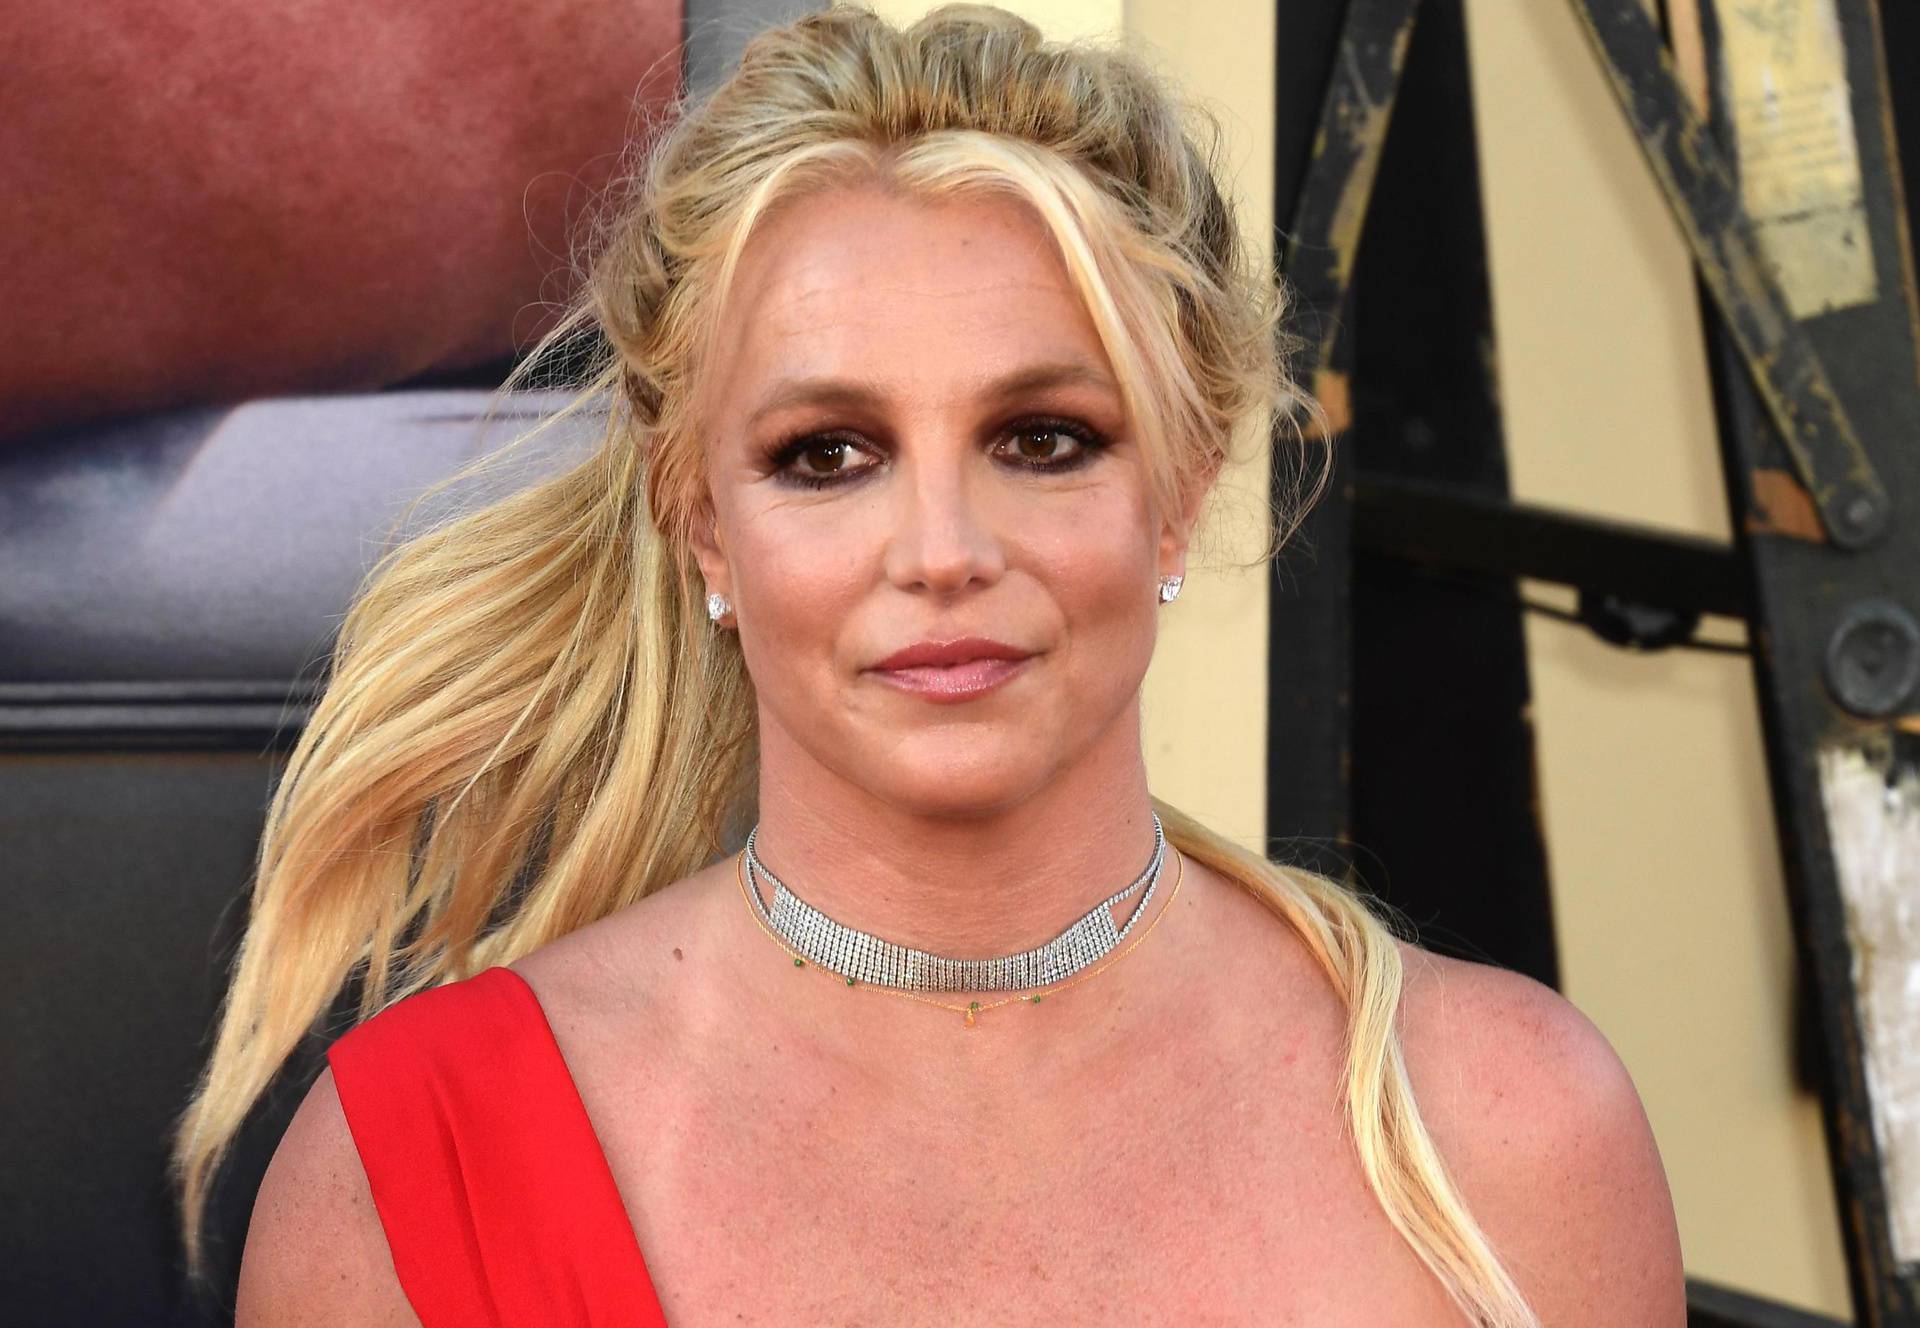 VIDEO Britney zapjevala nakon dugogodišnje pauze, fanovi u šoku: 'Napokon tvoj pravi glas'